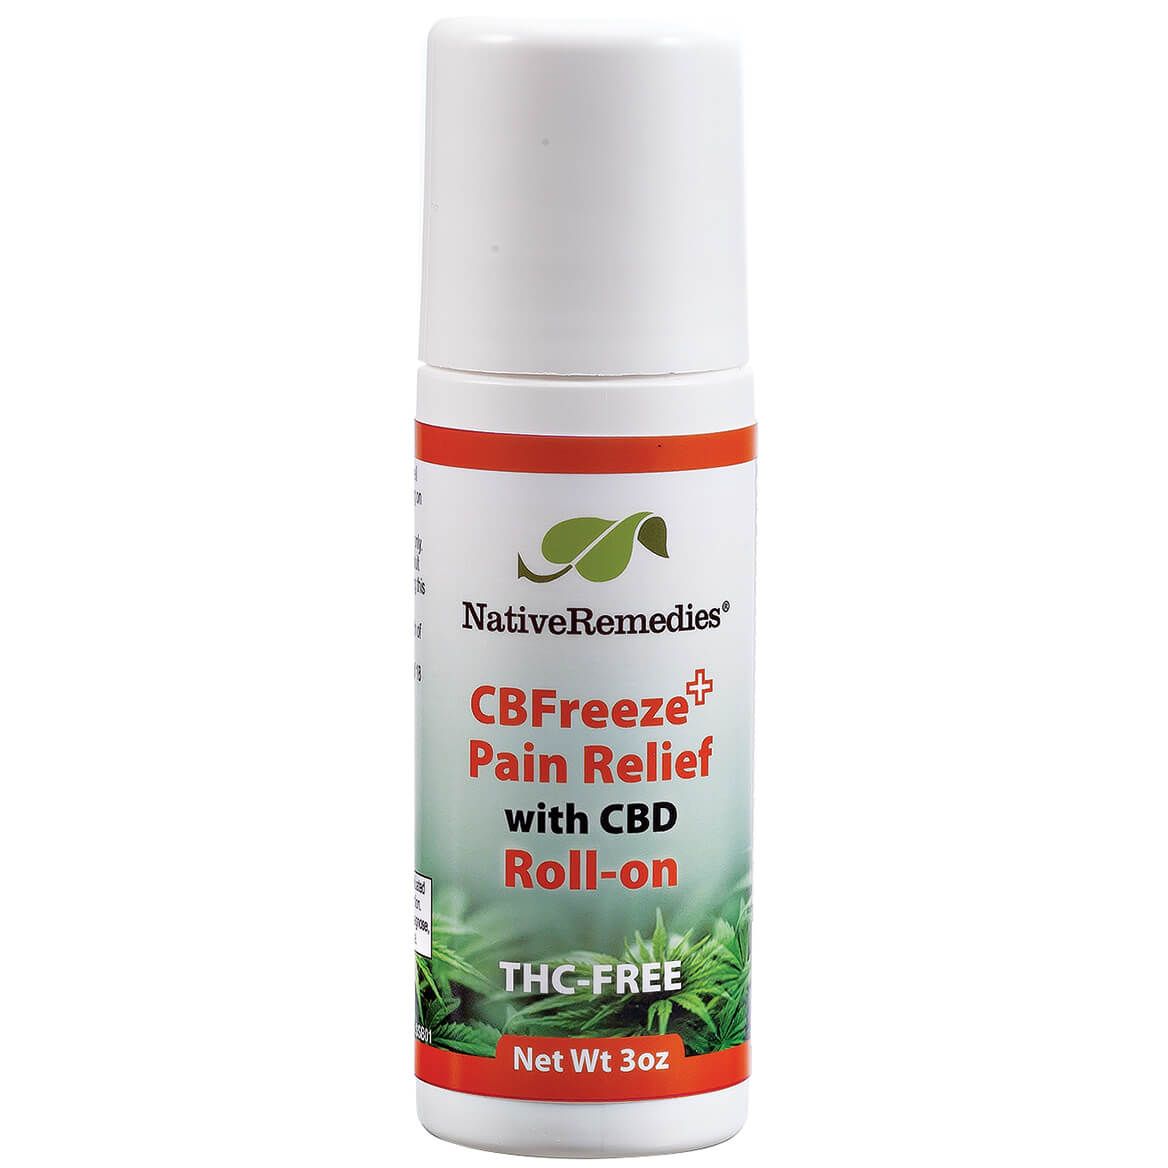 NativeRemedies® CBFreeze+ Pain Relief Roll-on + '-' + 369289